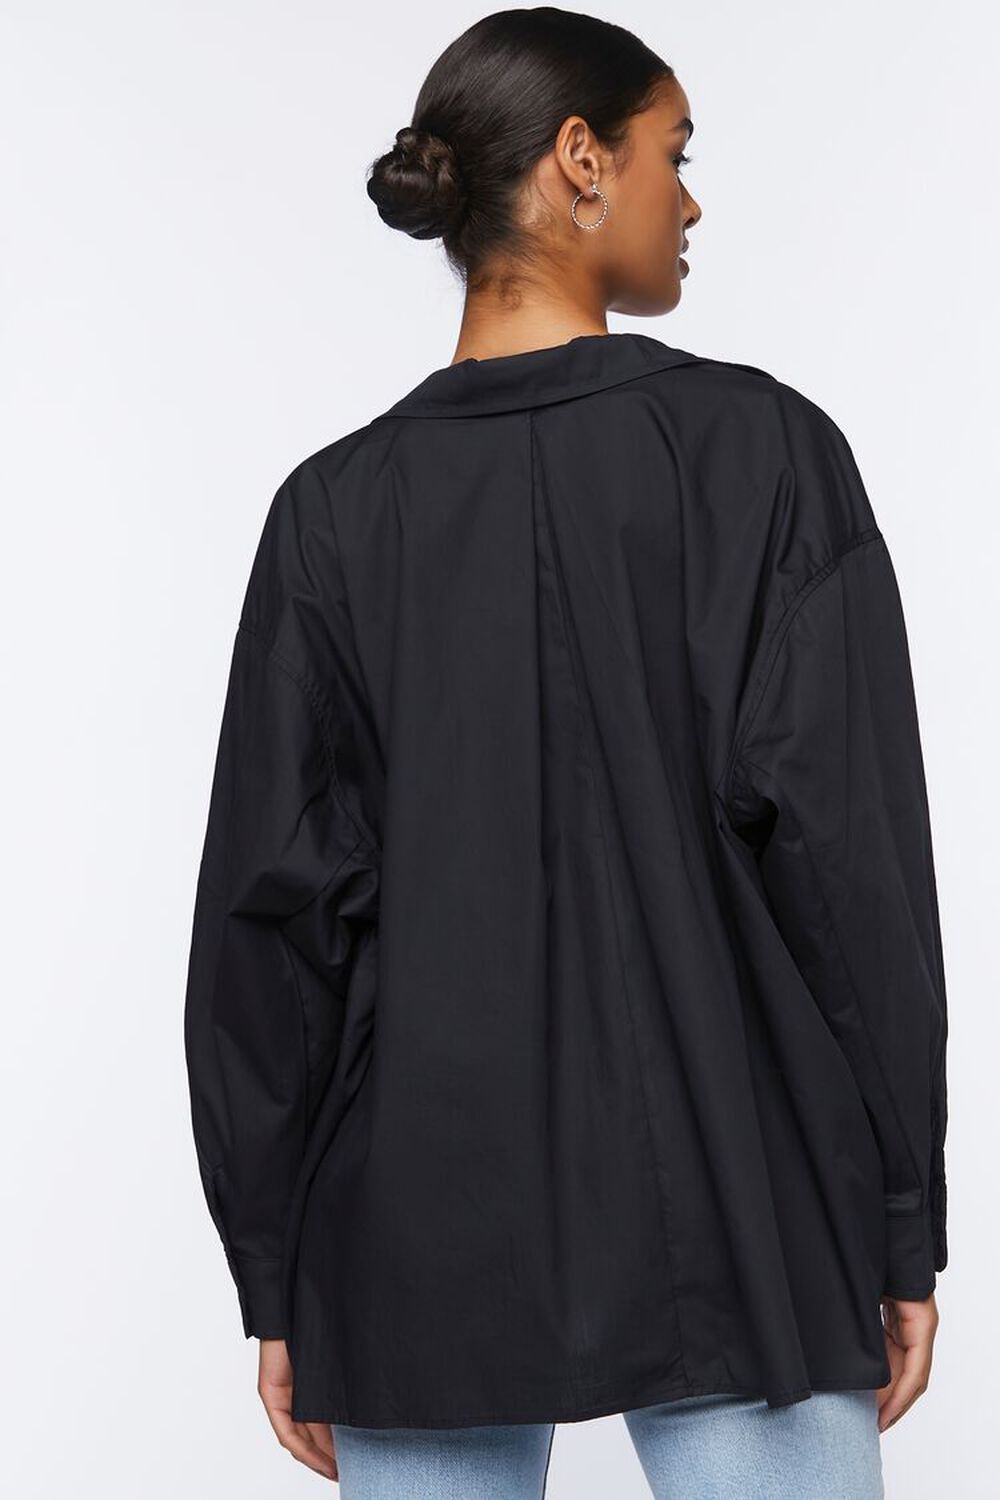 BLACK Oversized Poplin Shirt, image 3